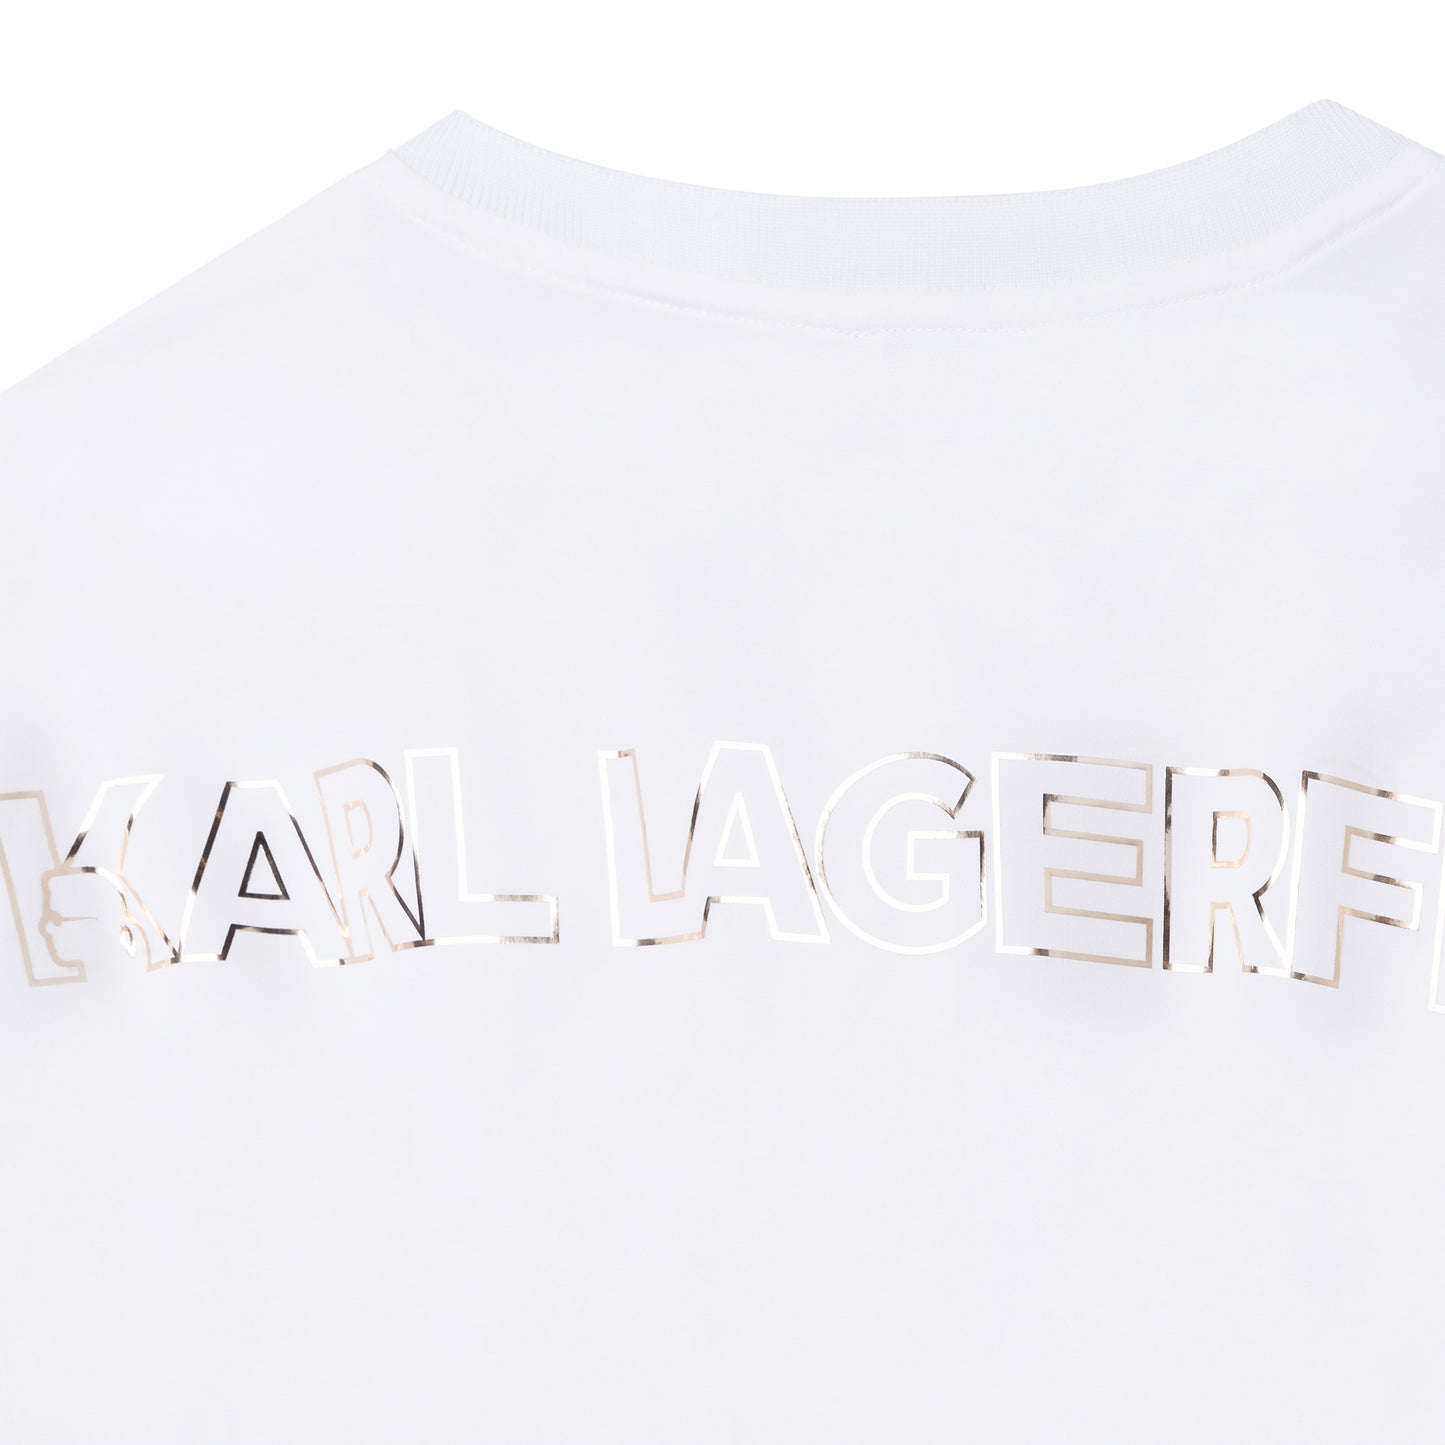 Karl Lagerfeld Oversized Pockets & Logo Jacket